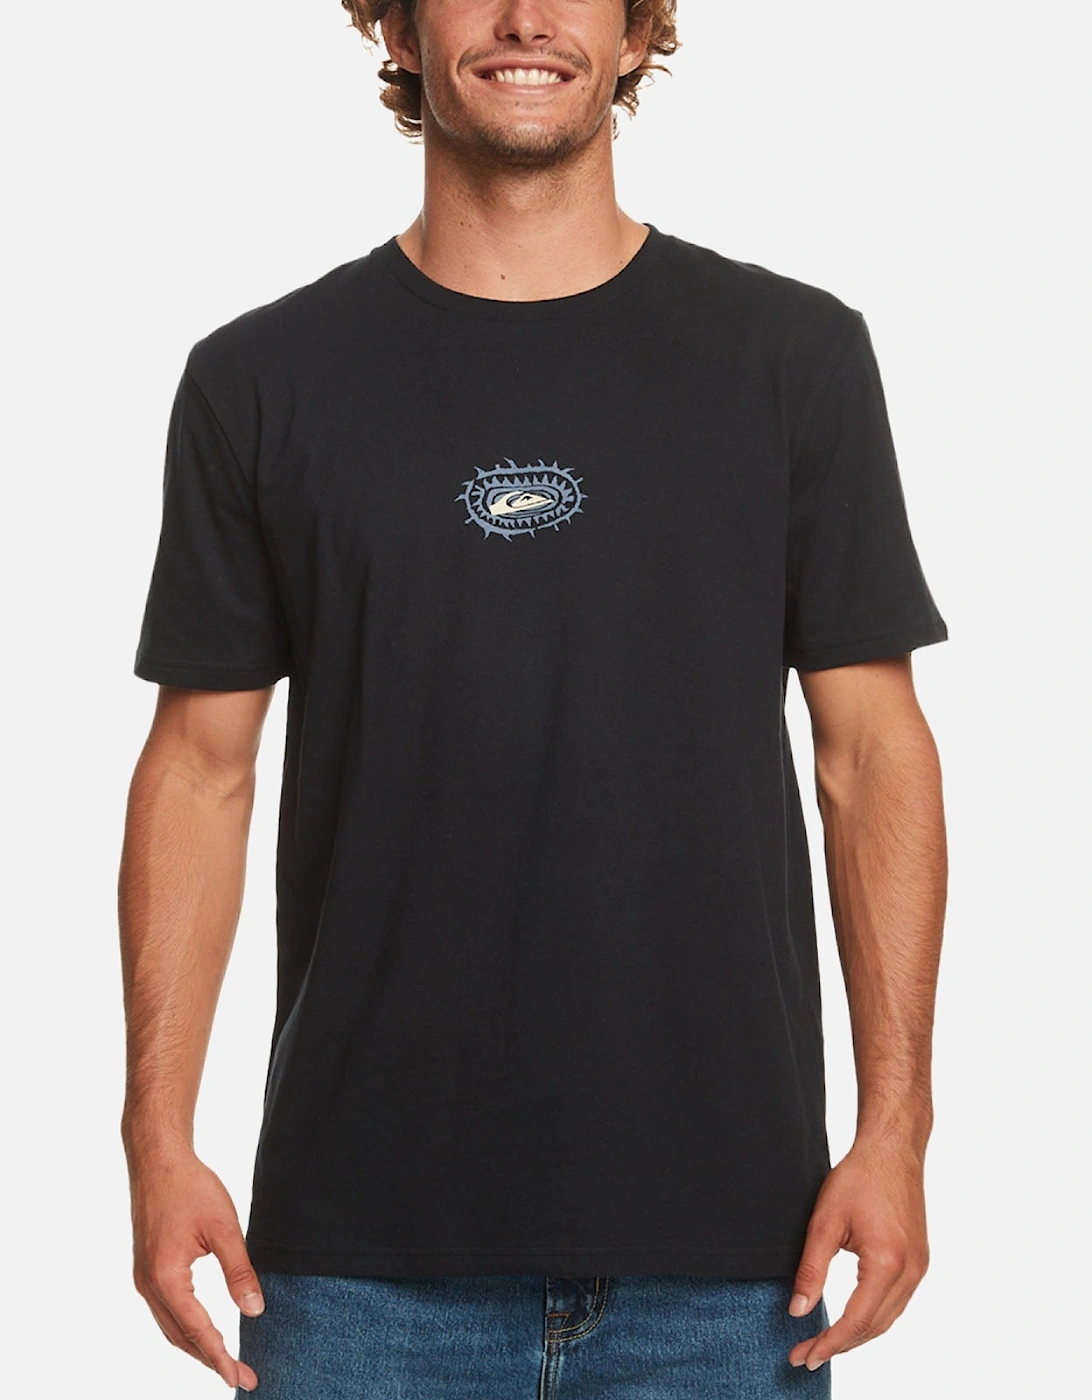 Mens Urban Surfin Short Sleeve Cotton T-Shirt